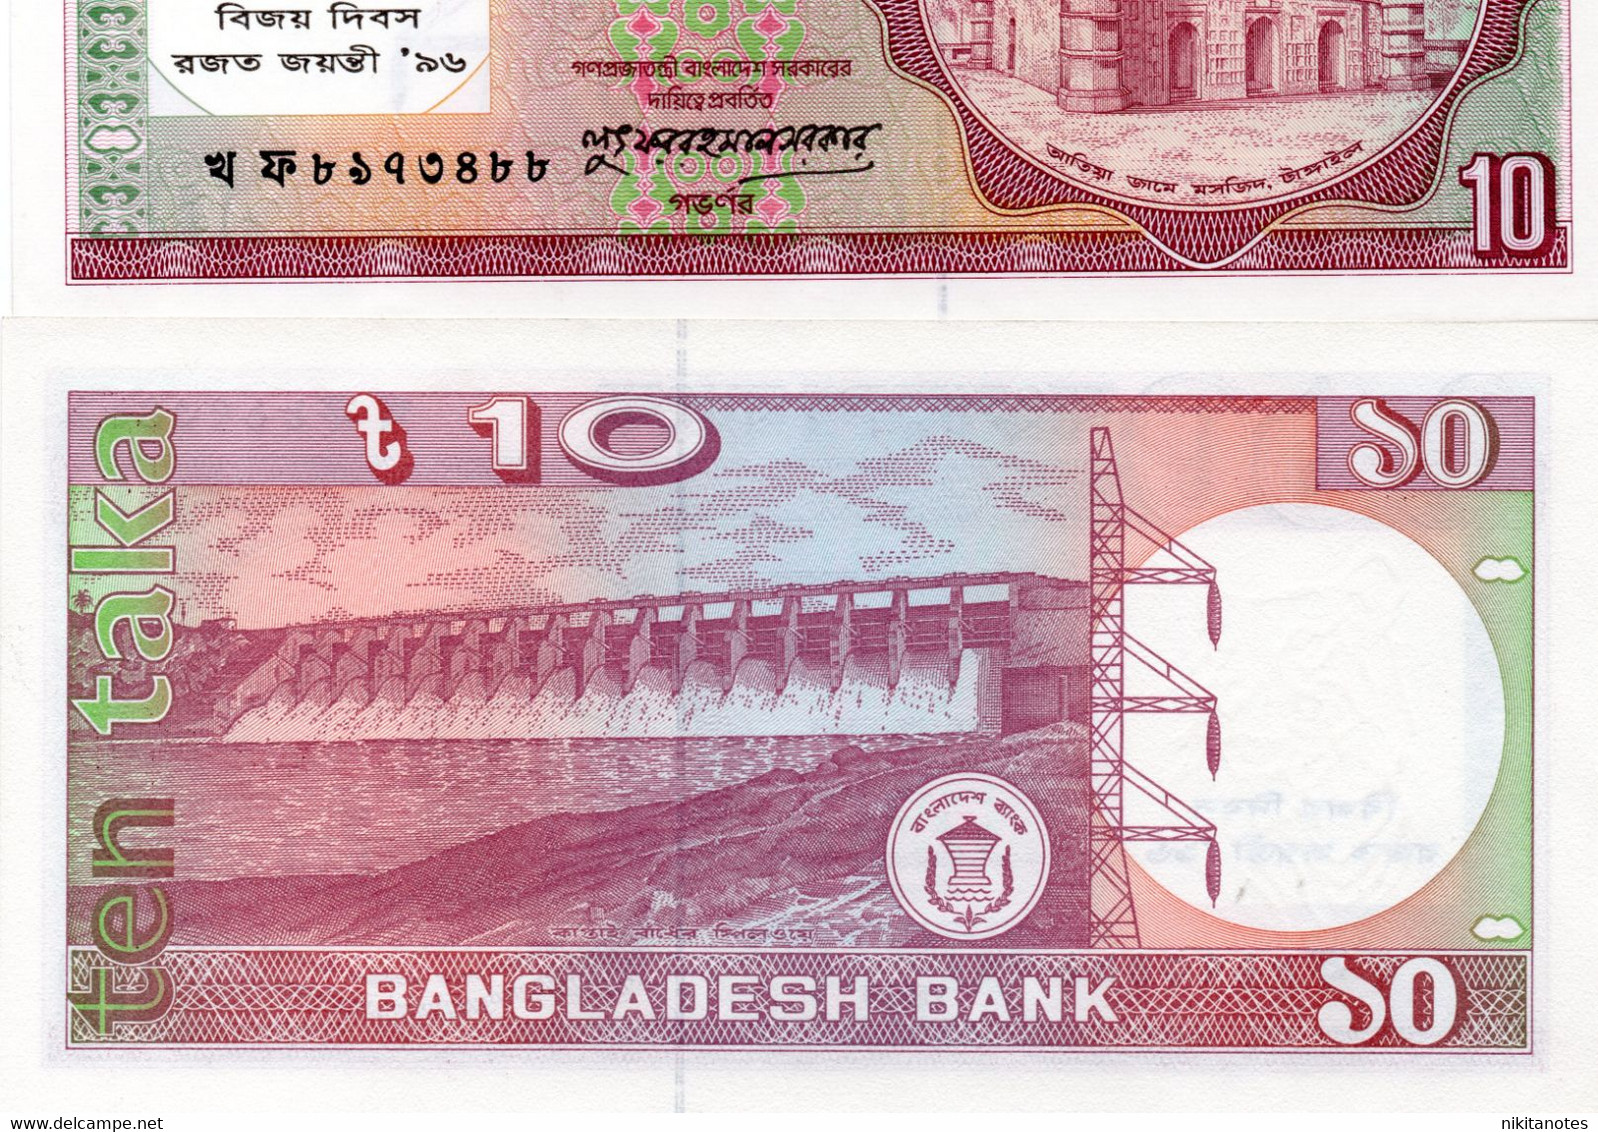 BANGLADESH - P 26 C3 - 10 TAKA - 1996  Unc See Scan Note Different Serial - Bangladesh